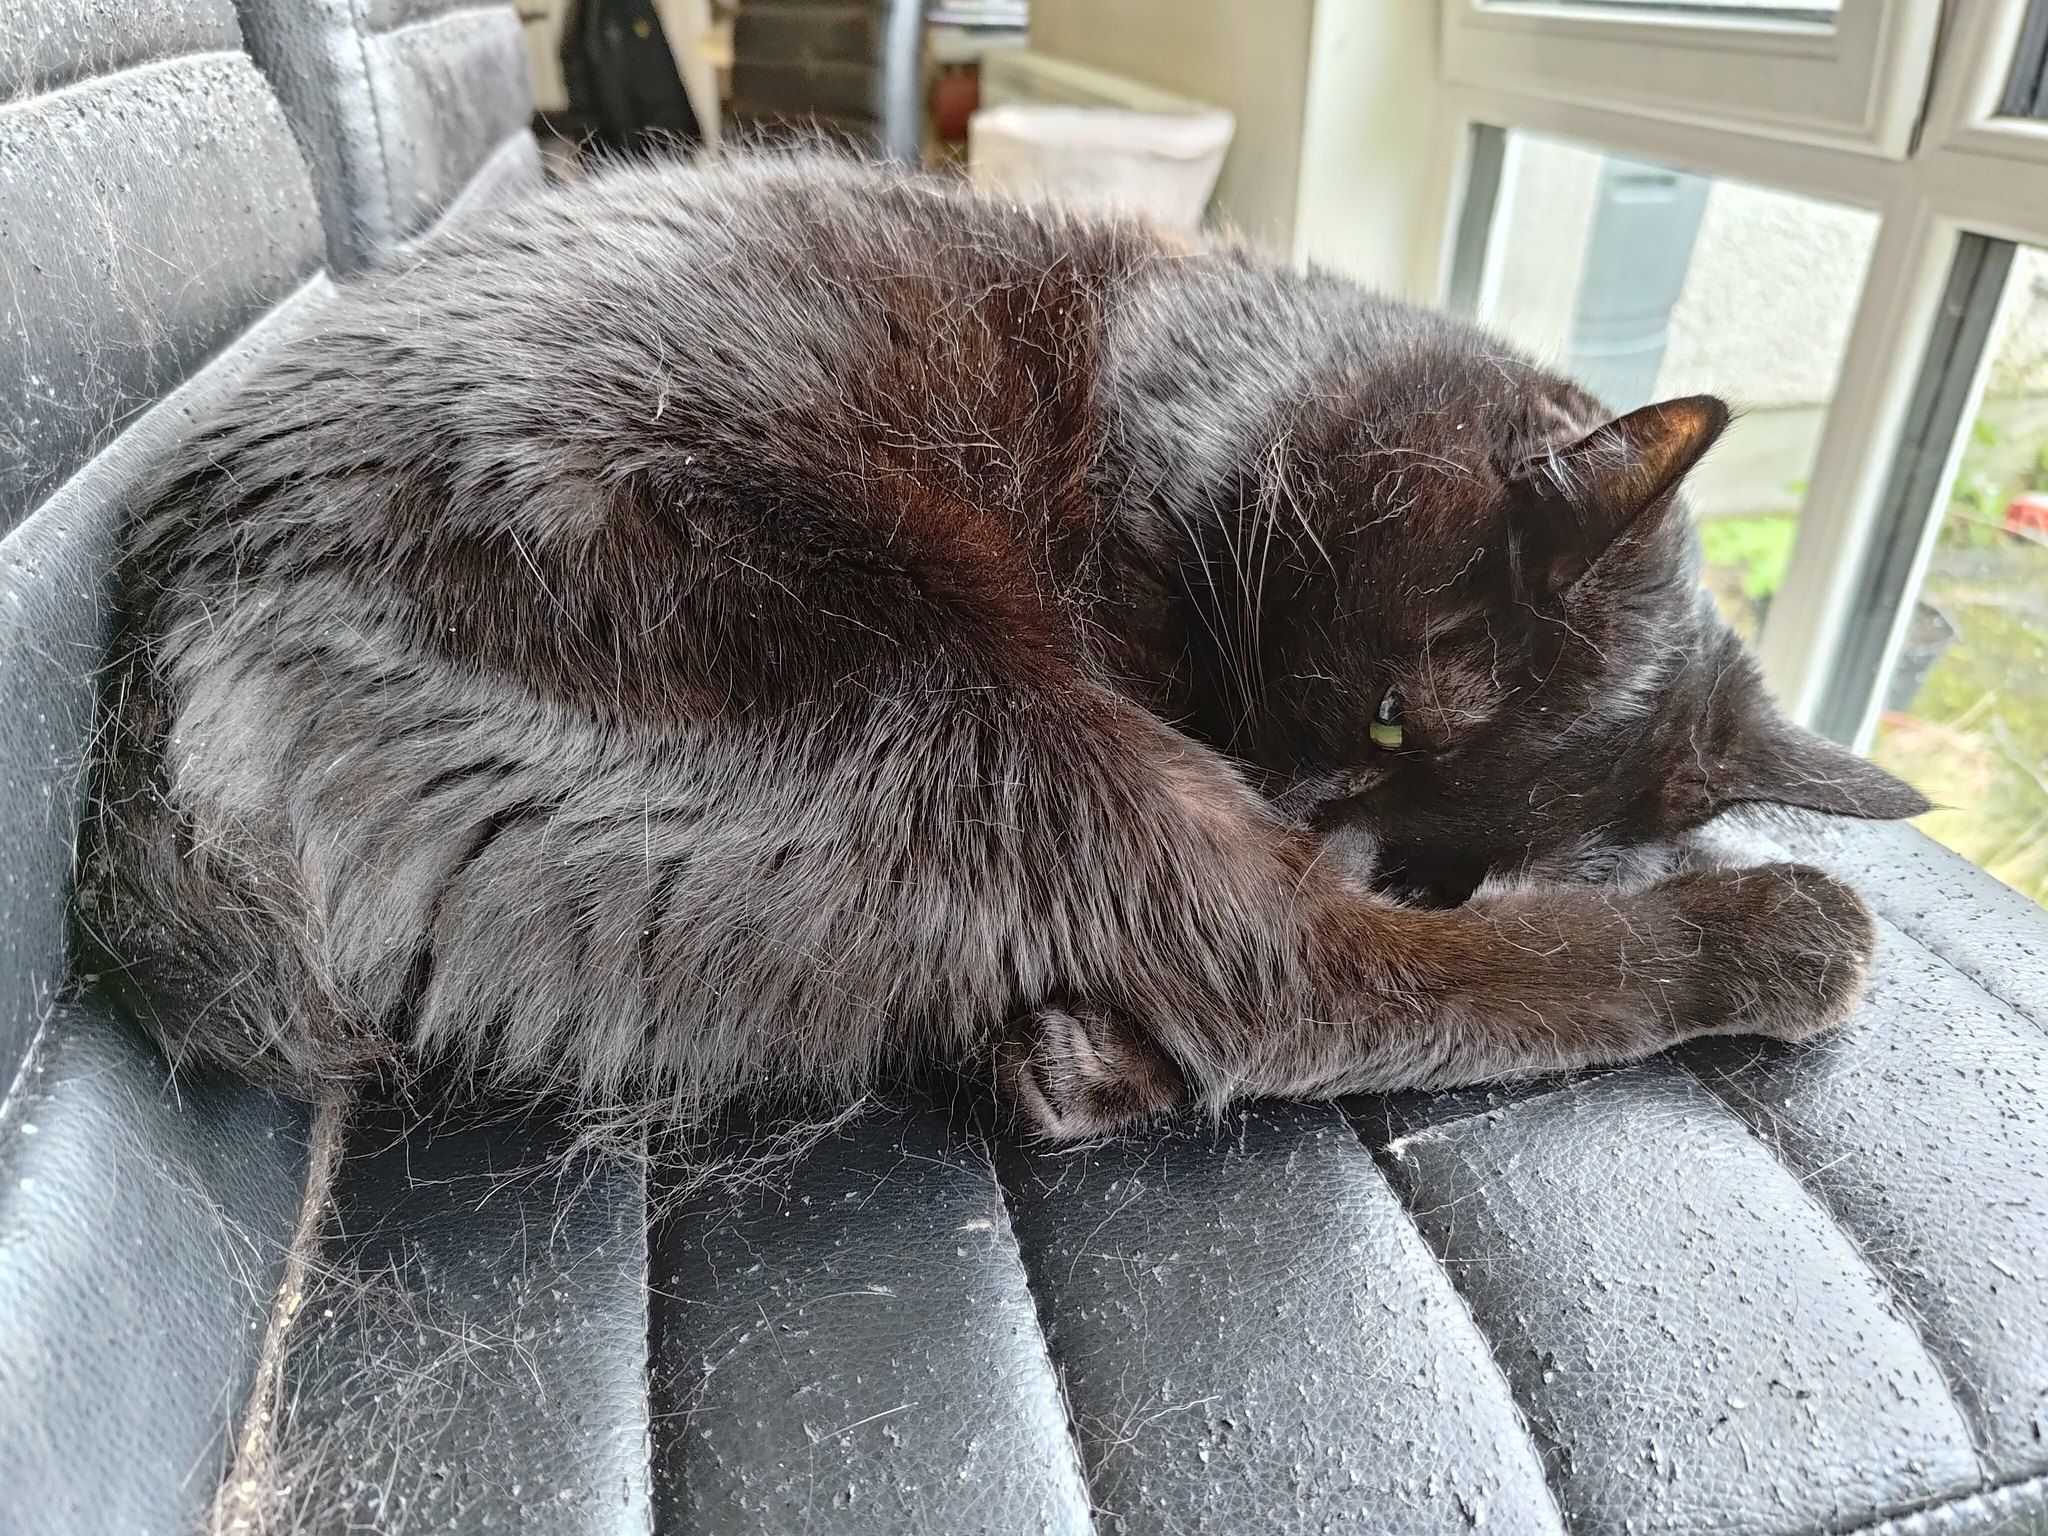 A black cat curled up in the sun